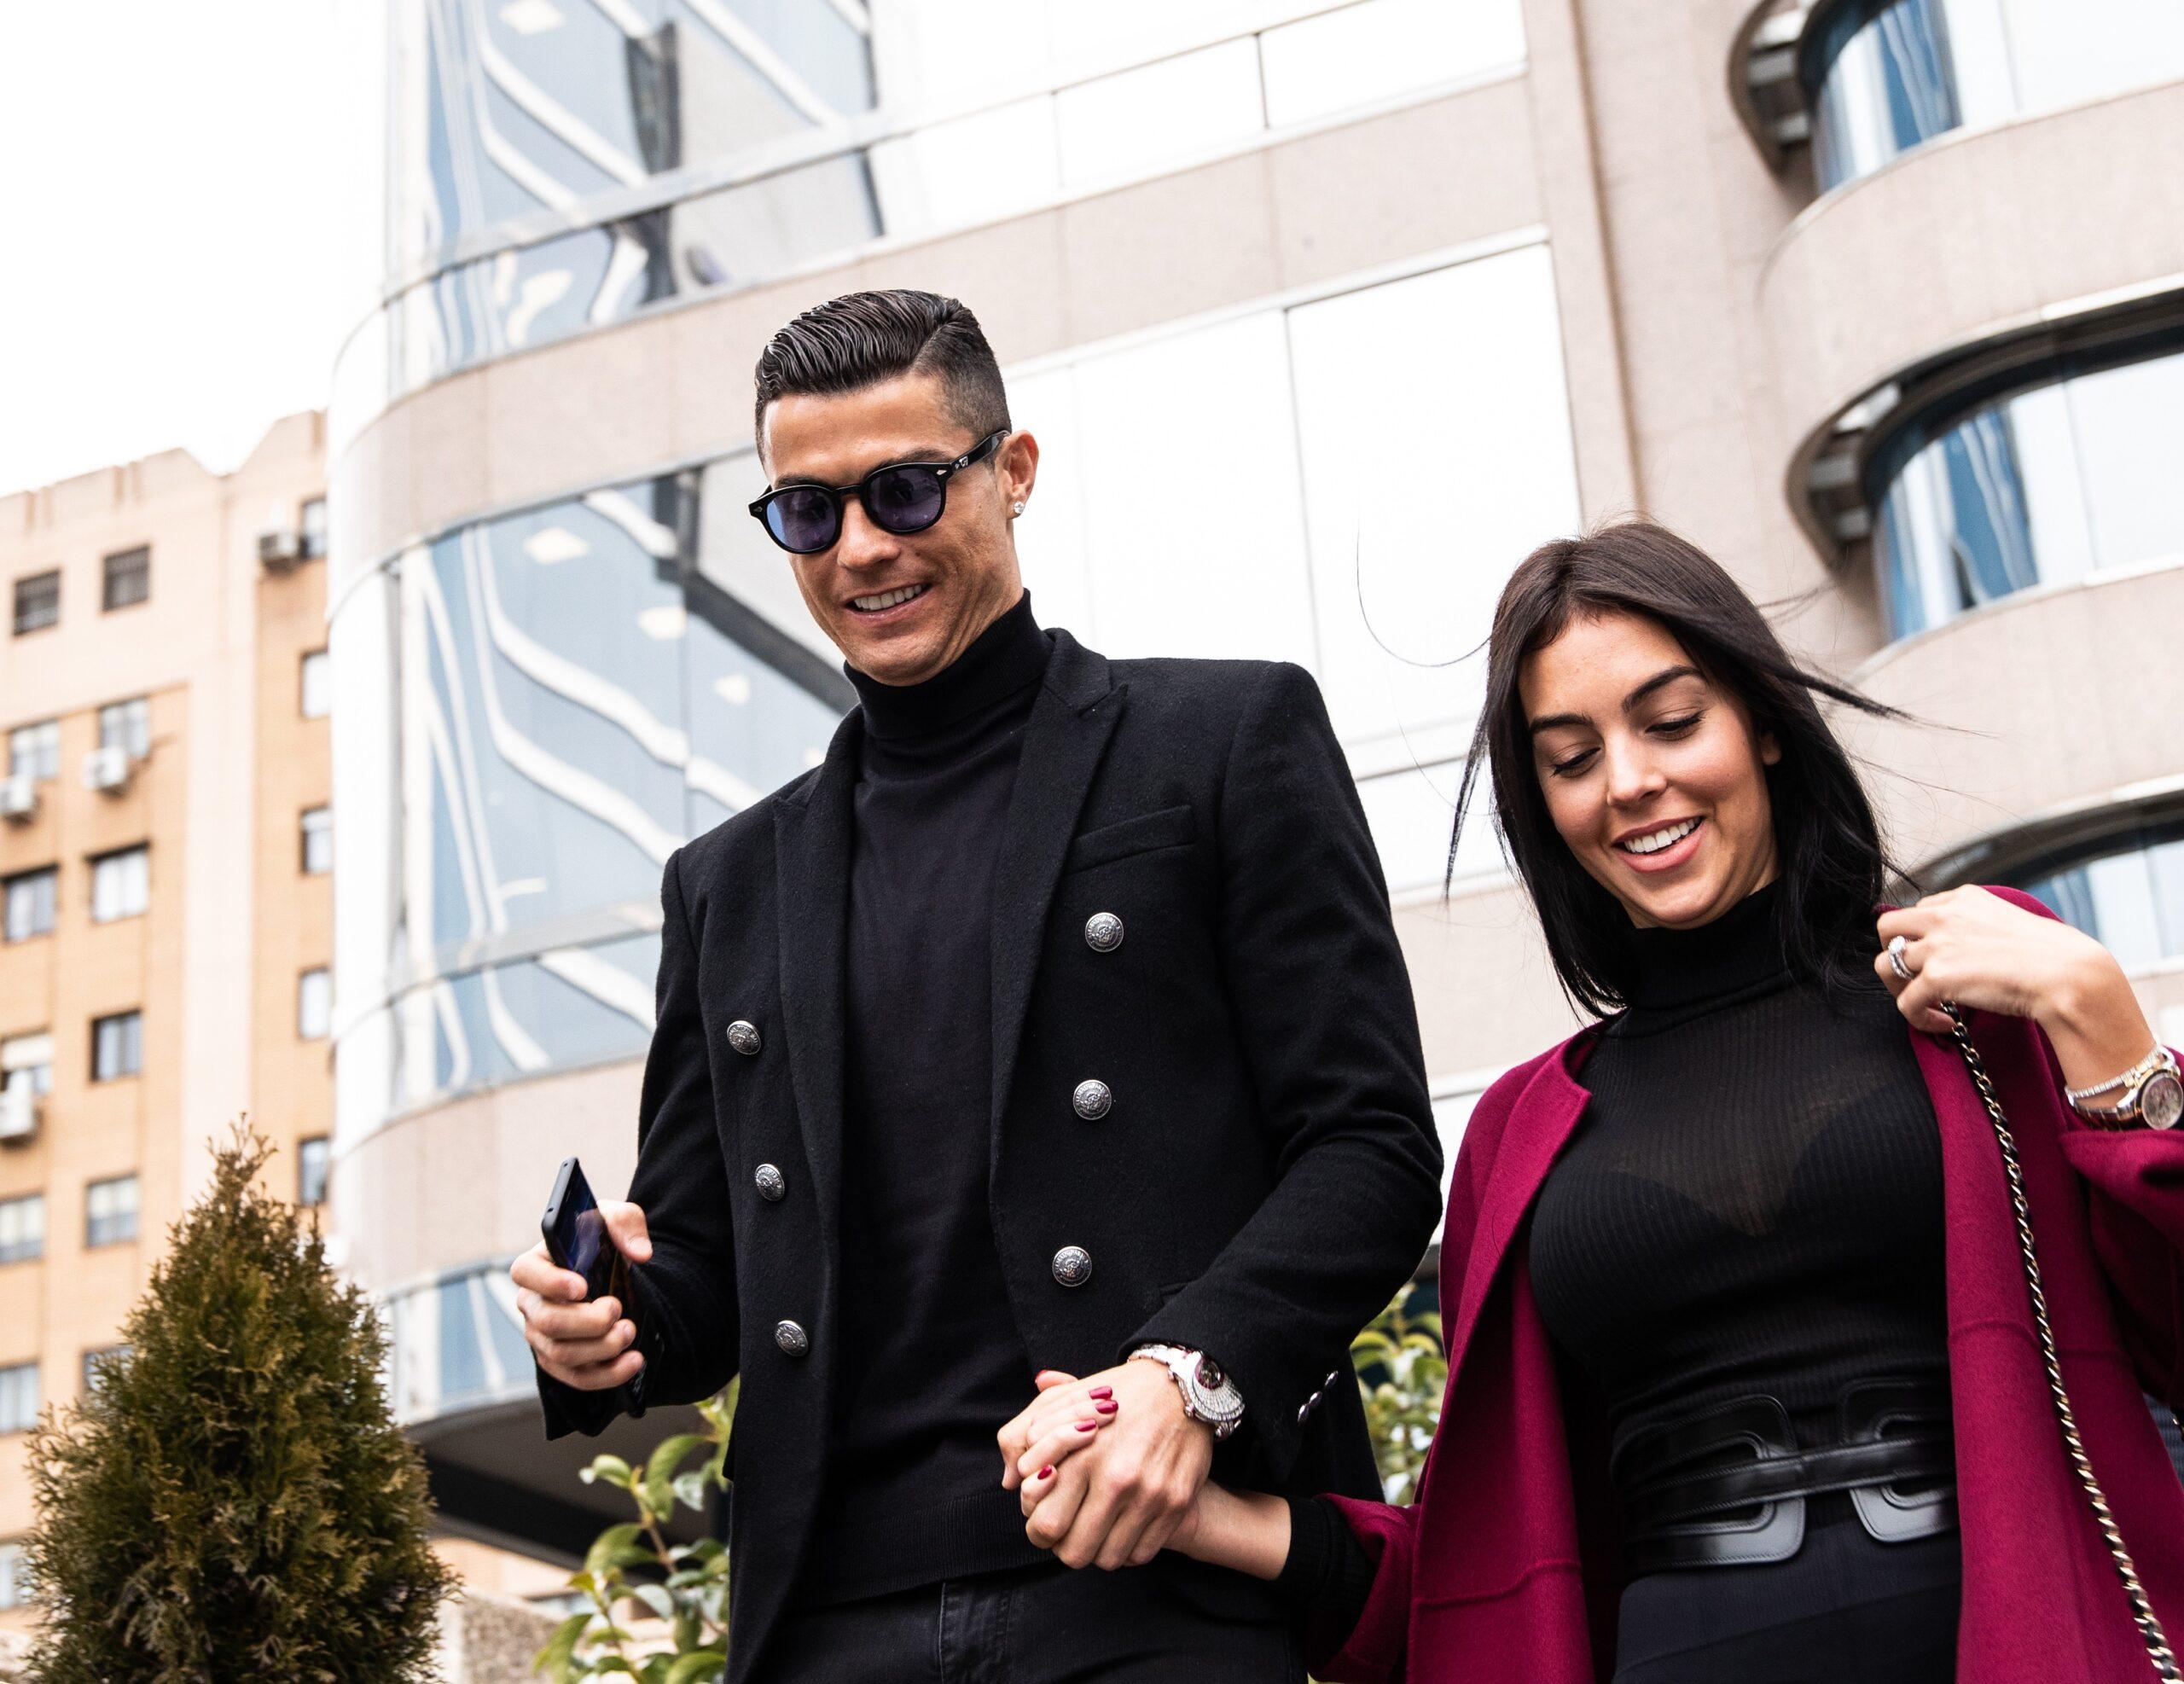 Cristiano Ronaldo and Georgina Rodríguez walking